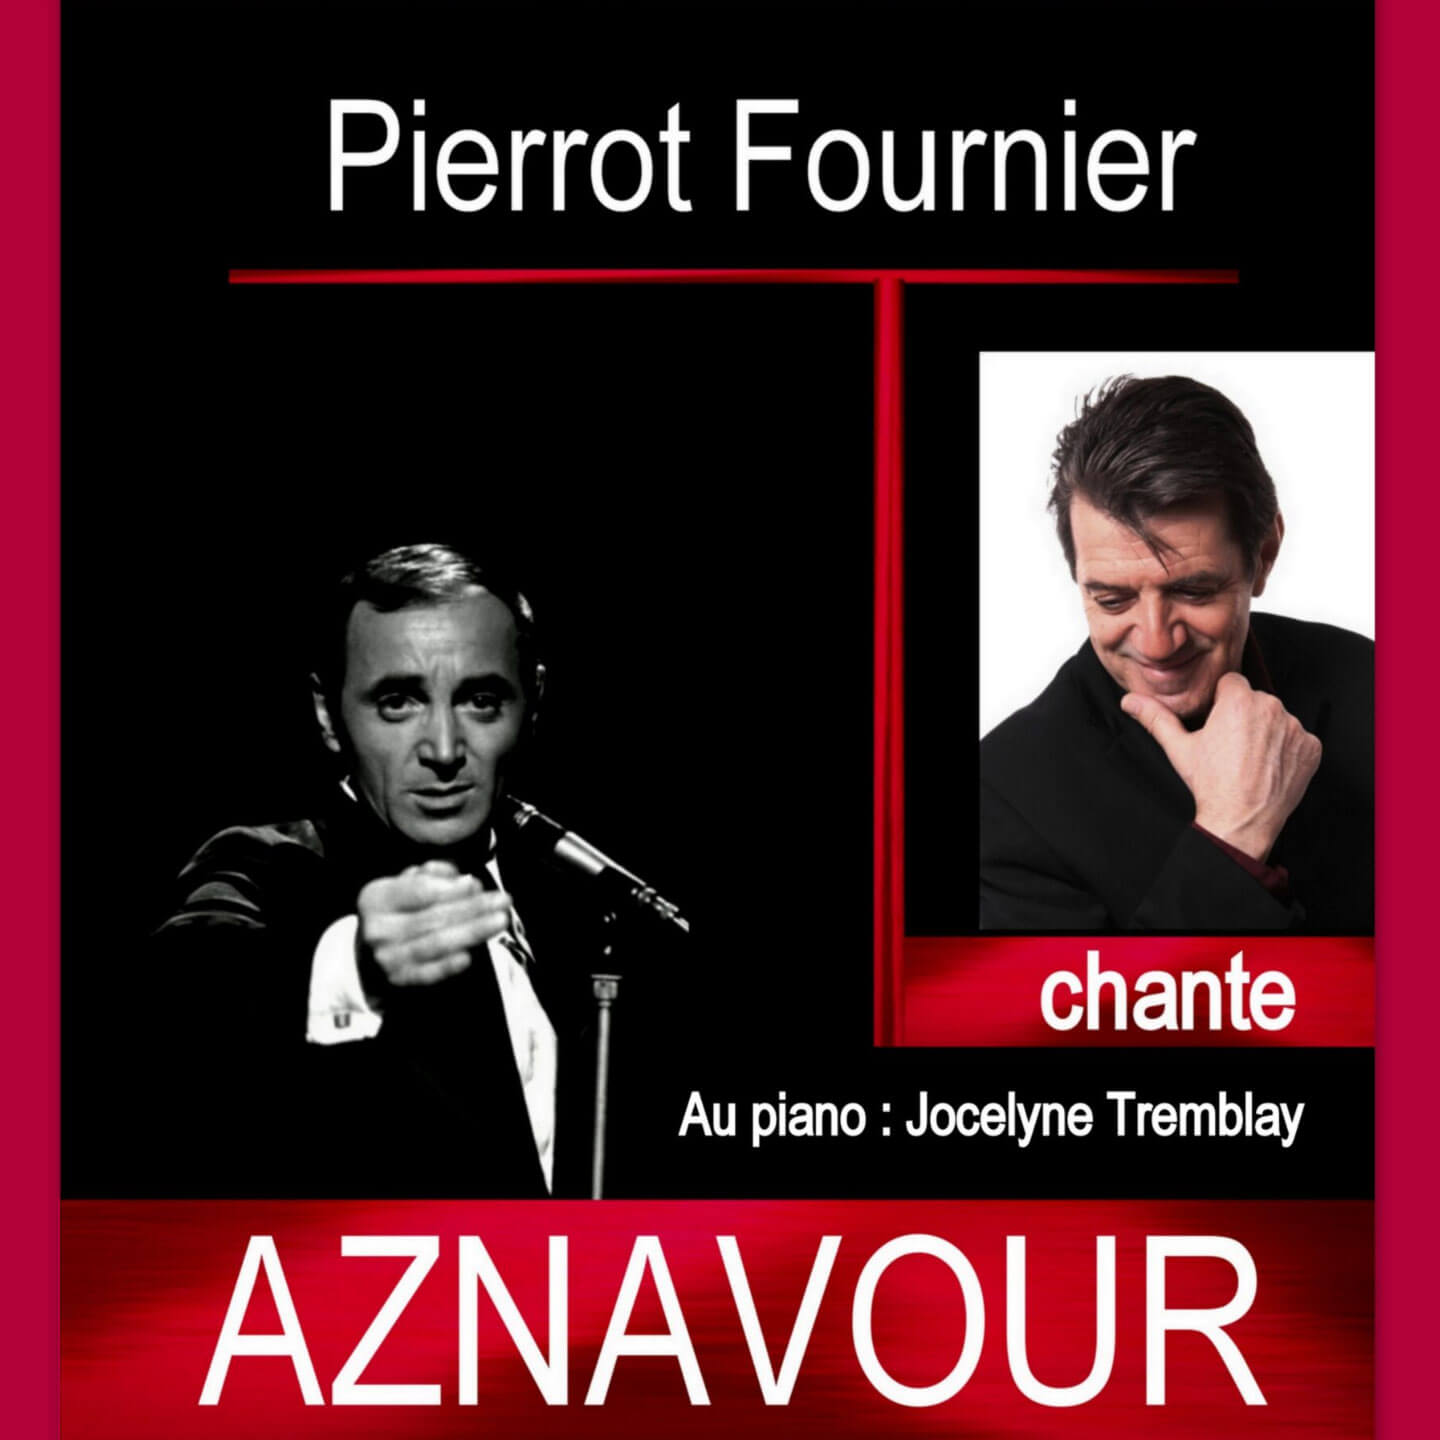 Pierrot Fournier chante Aznavour